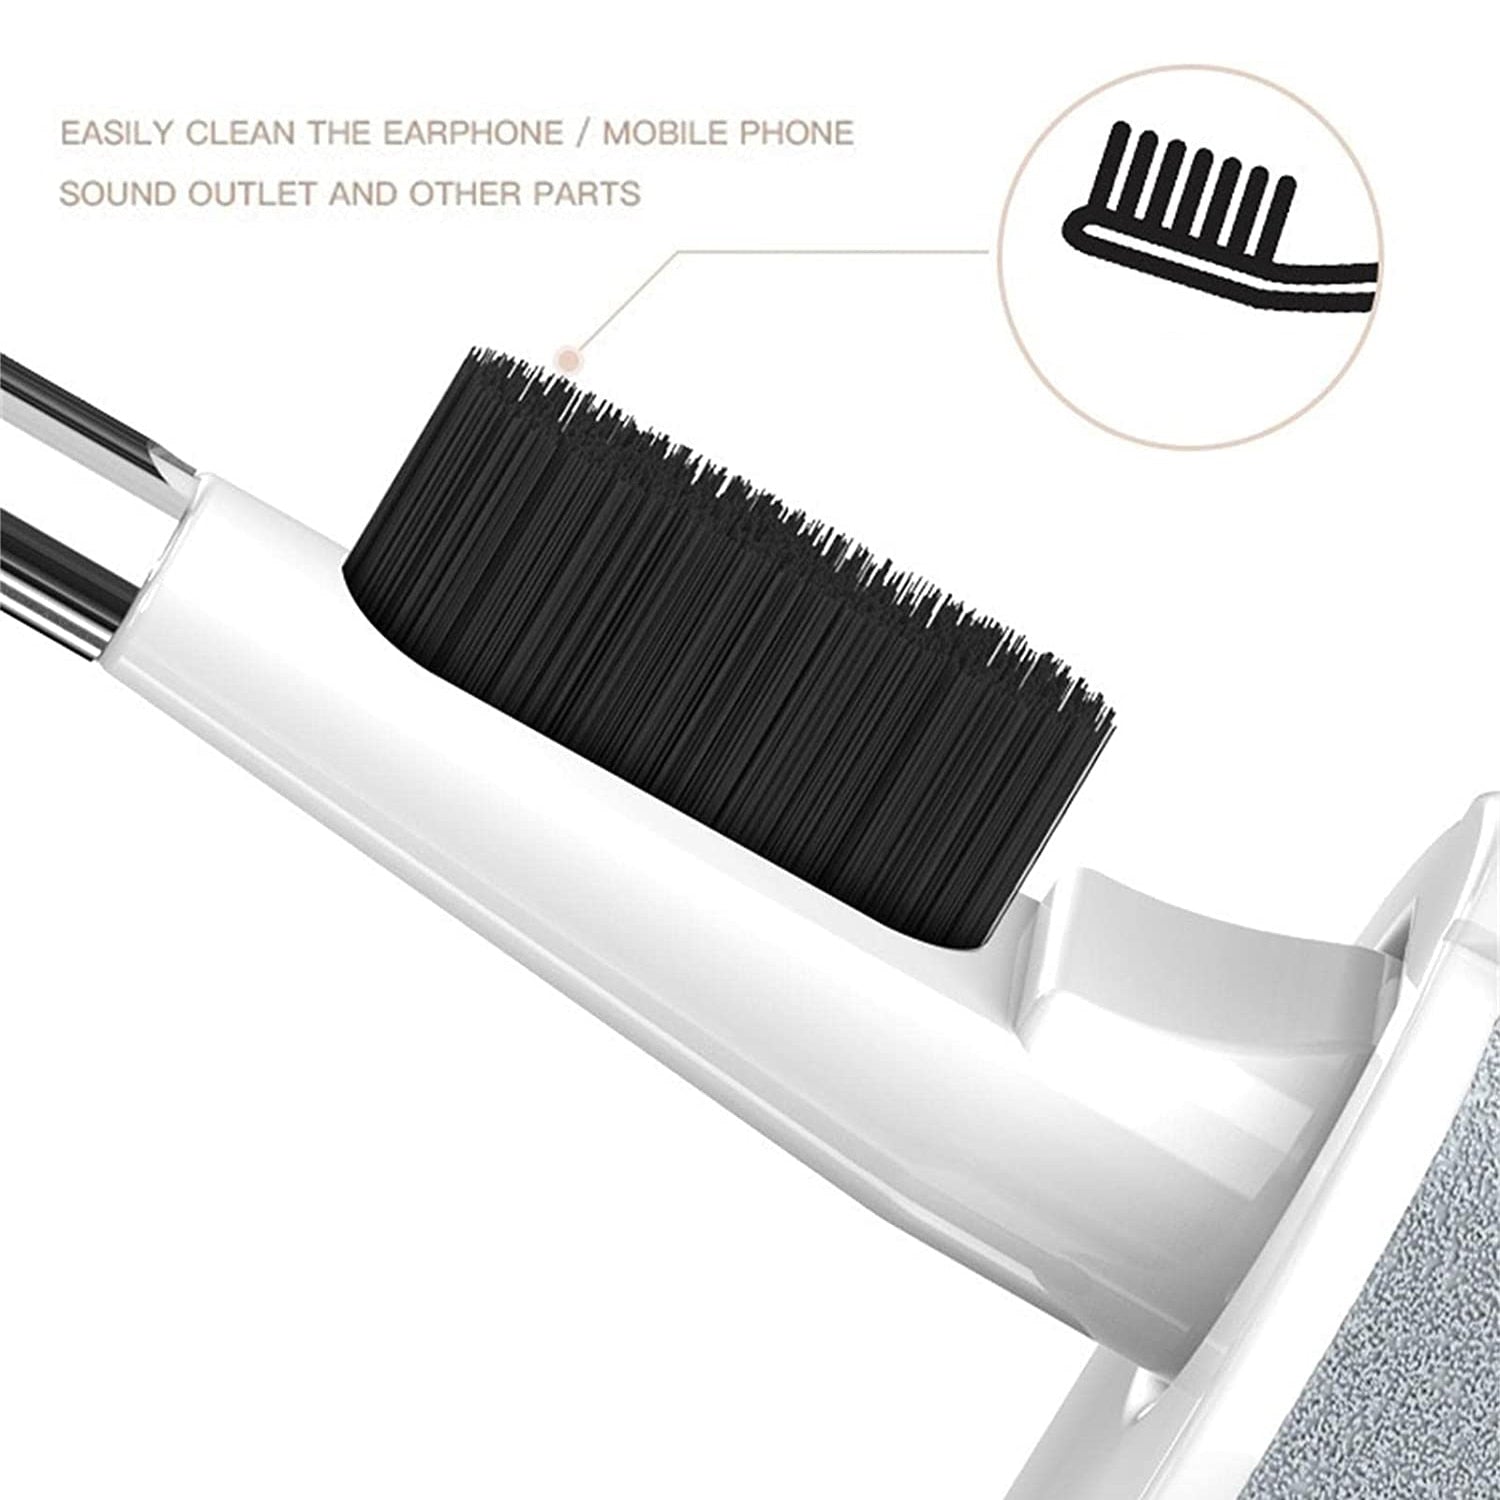 5 in 1 Earphone Phone Screen Cleaner Brush Kit